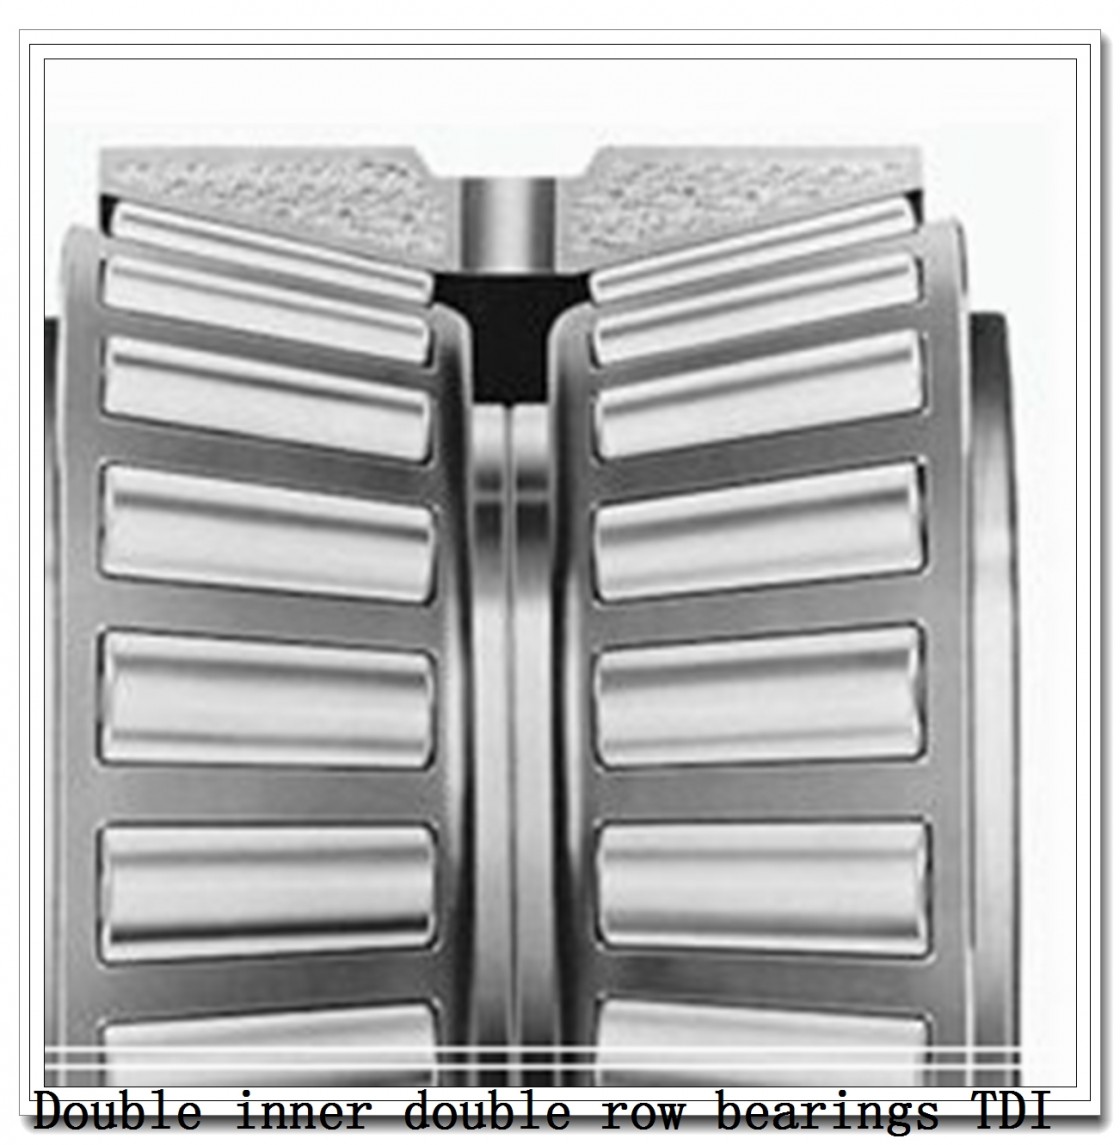 750TDO1090-1 Double inner double row bearings TDI